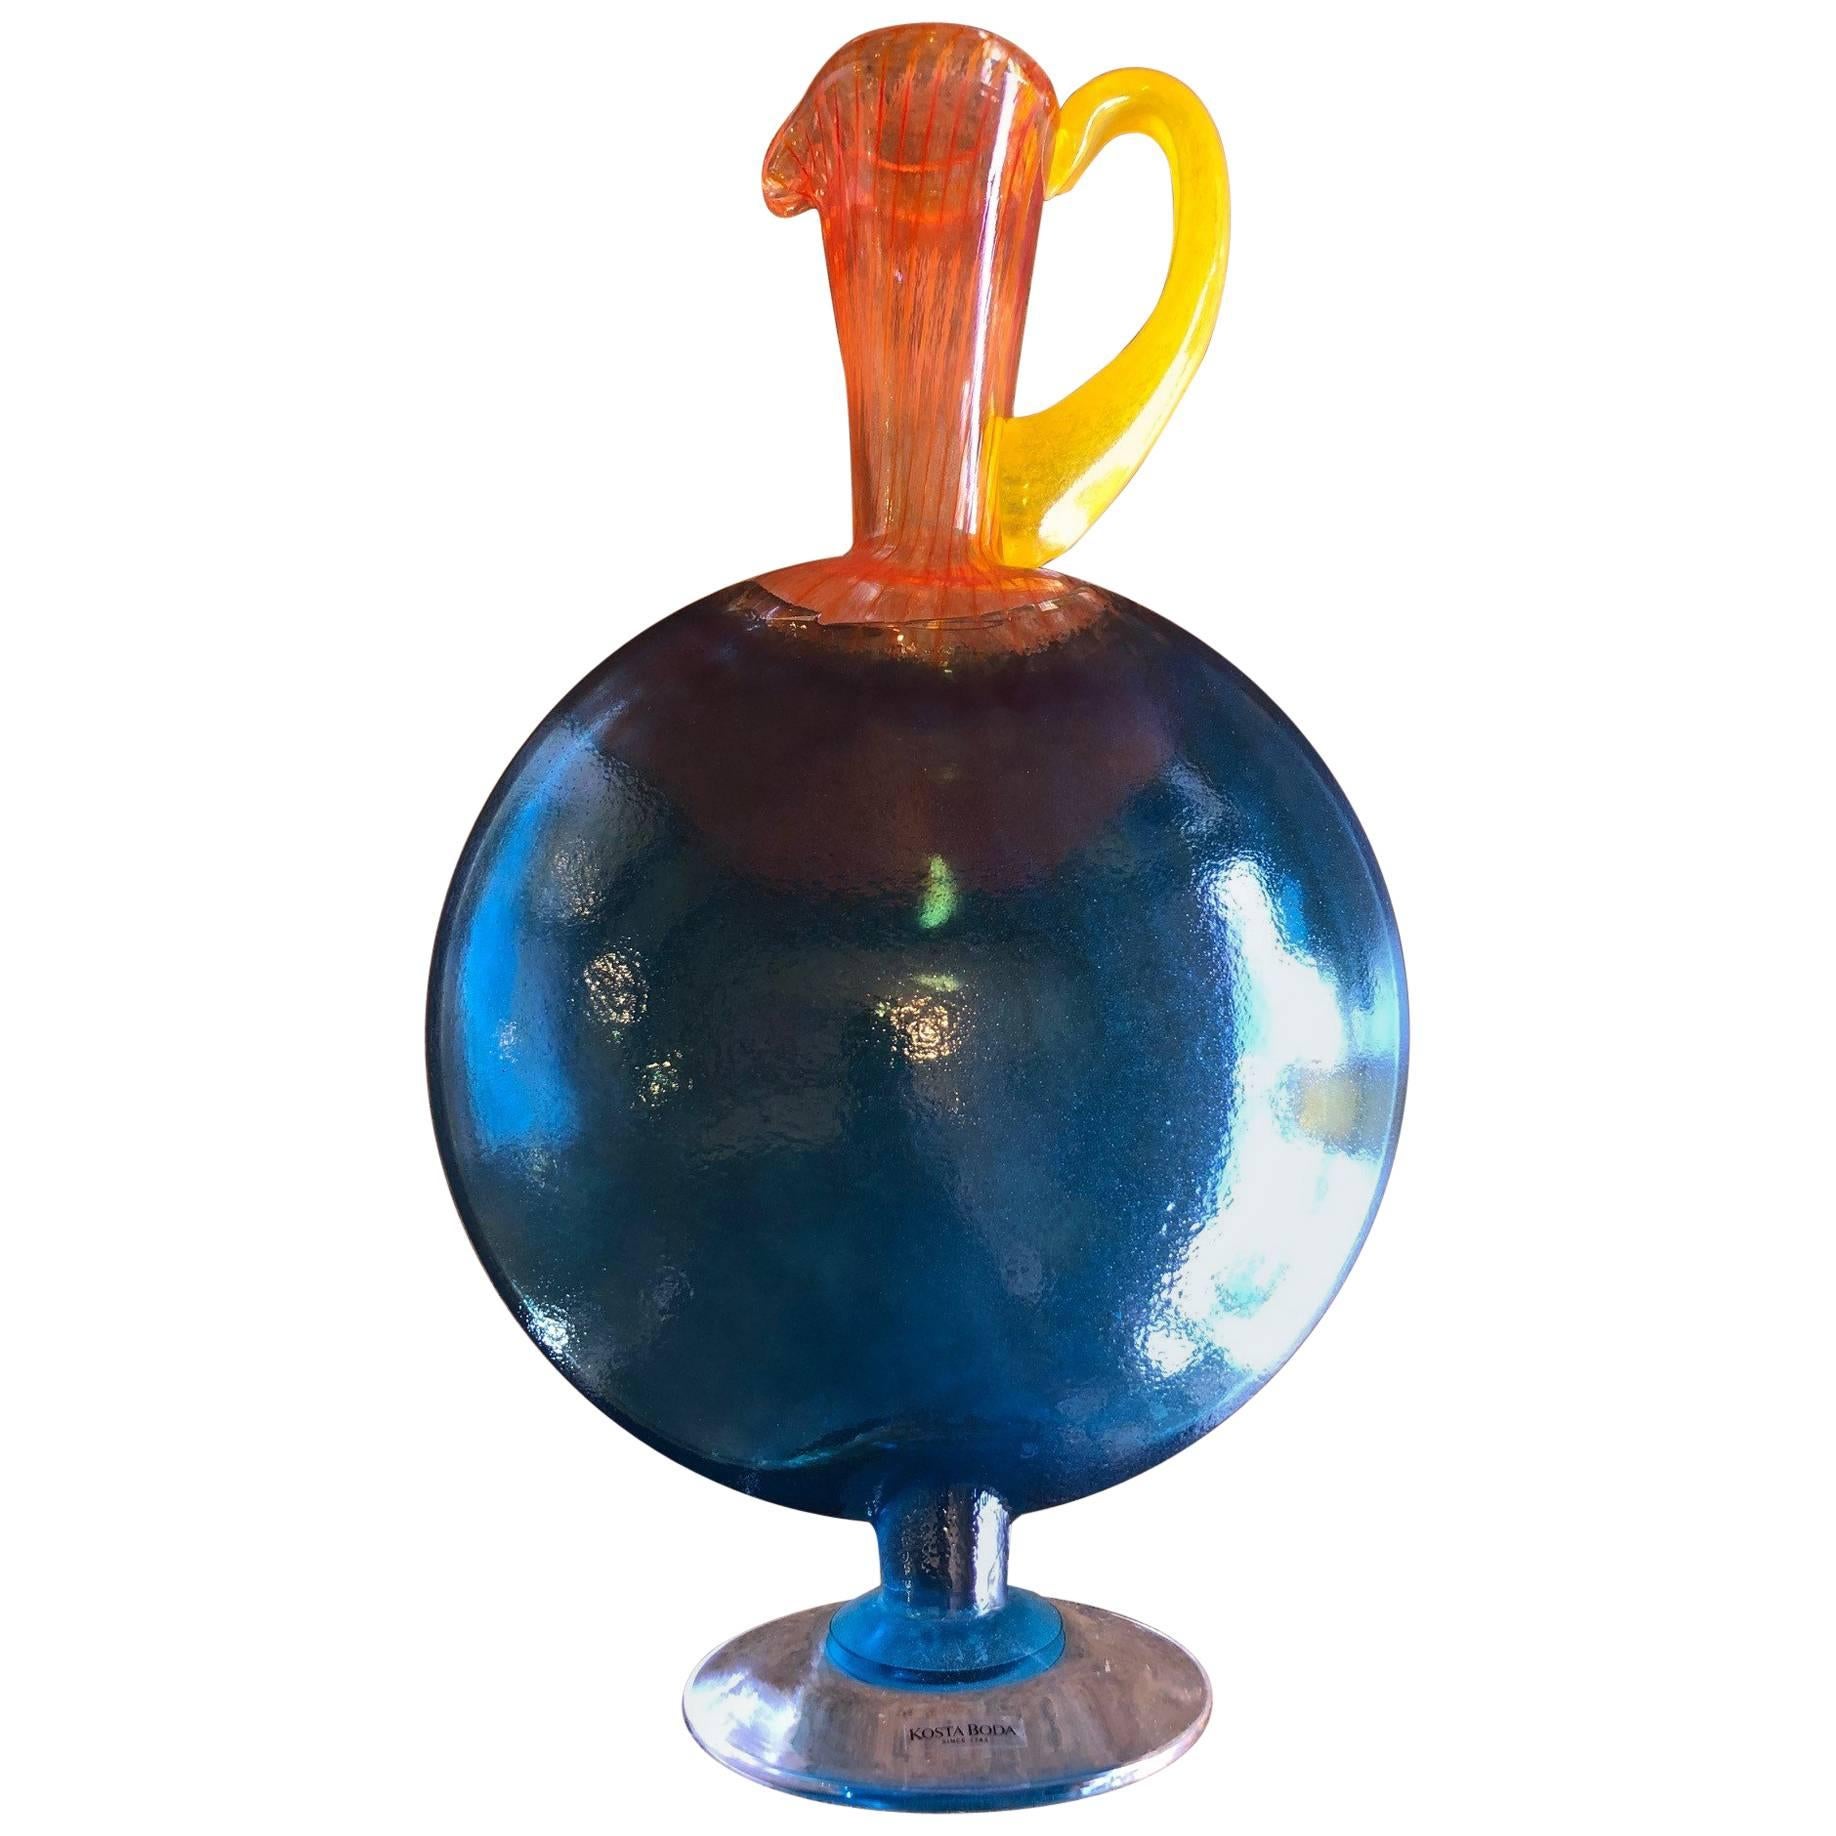 "Bon Bon" Art Glass Ewer or Pitcher by Kjell Engman or Kosta Boda